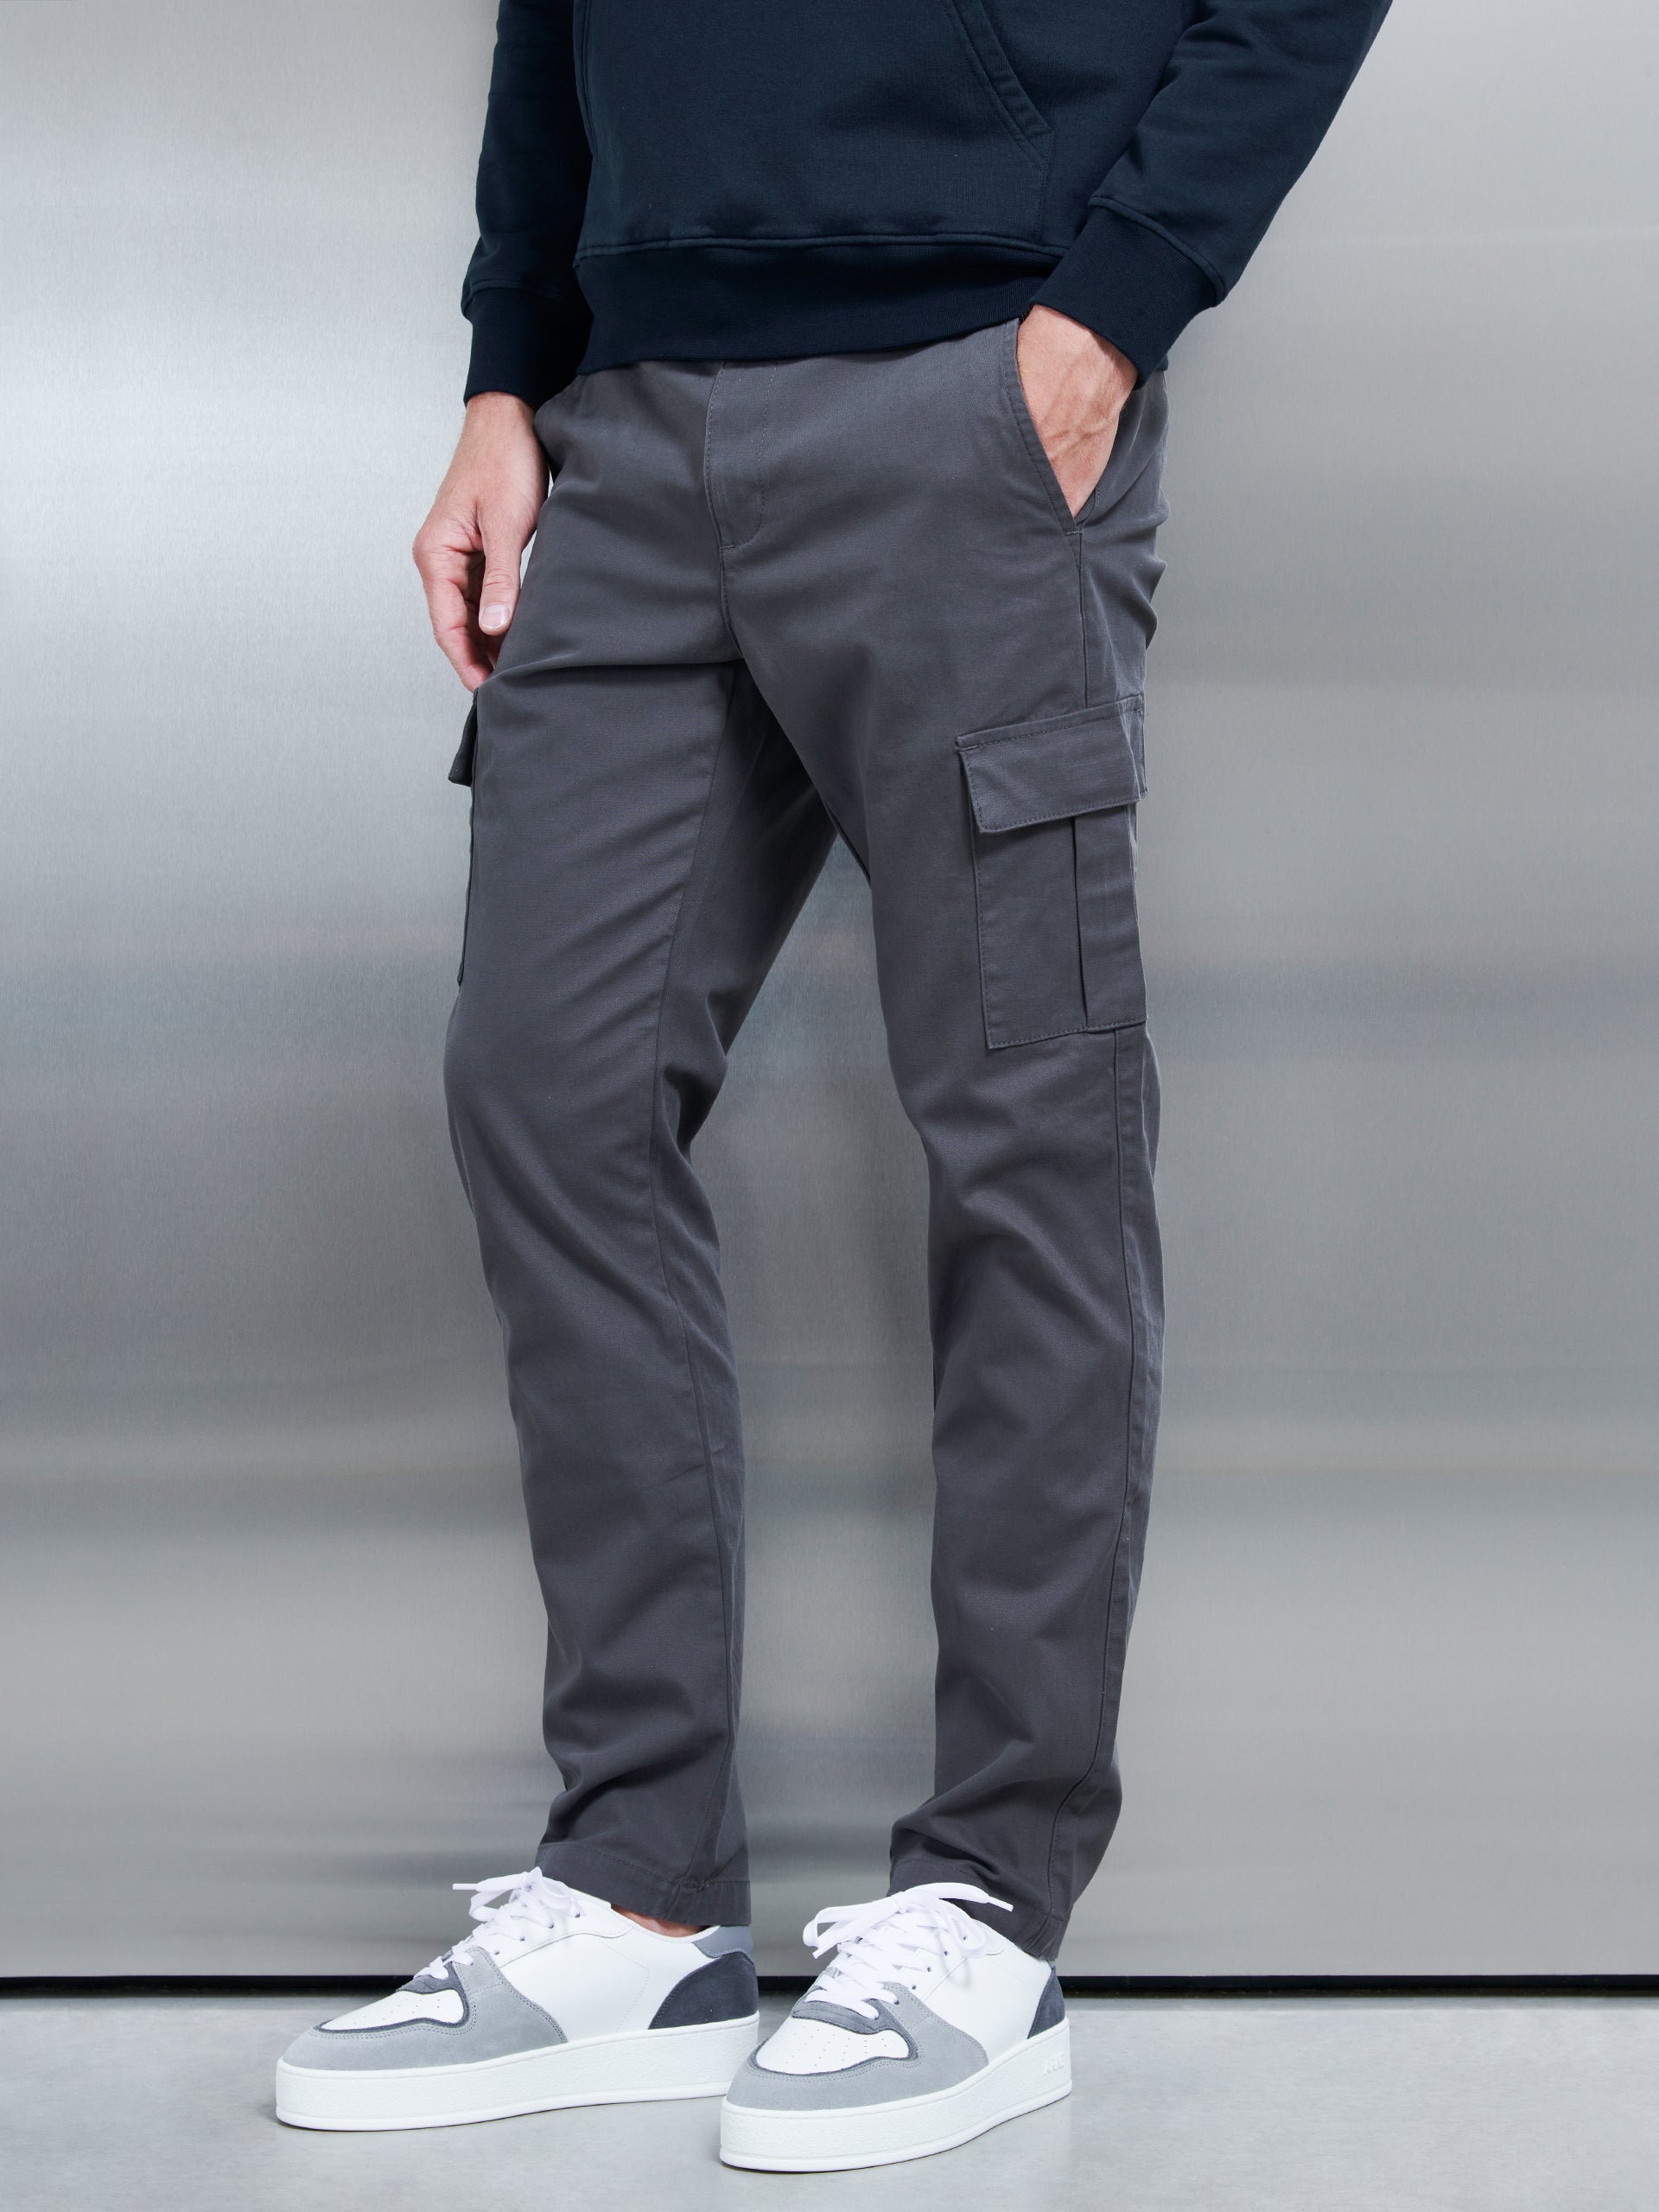 Soojun Men's Cotton Relaxed Fit Full Elastic Waist Twill Pants, Black, 30W  x 28L at Amazon Men's Clothing store